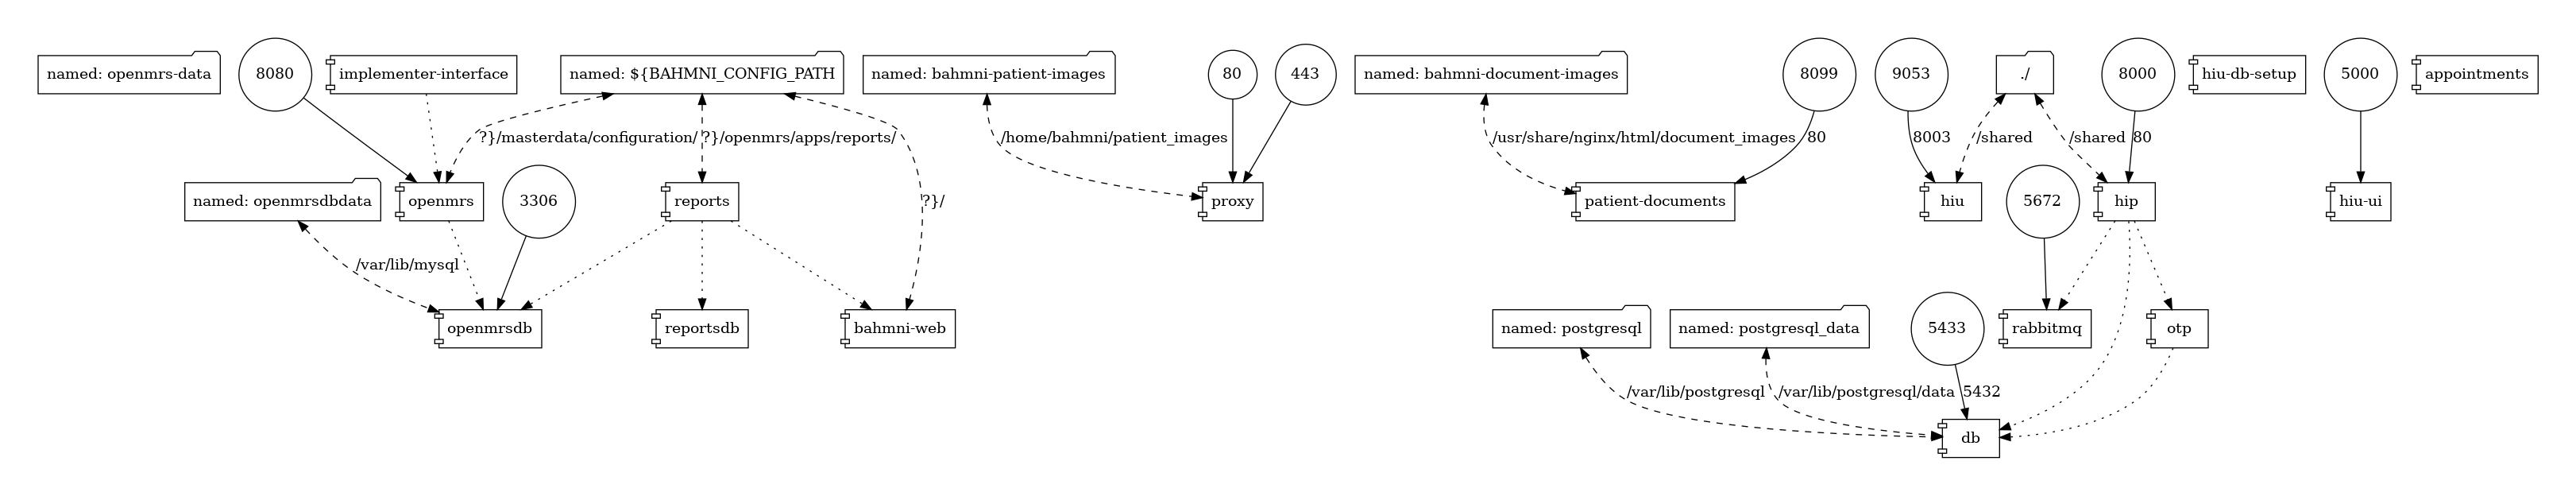 docker-compose-architecture-diagram.png